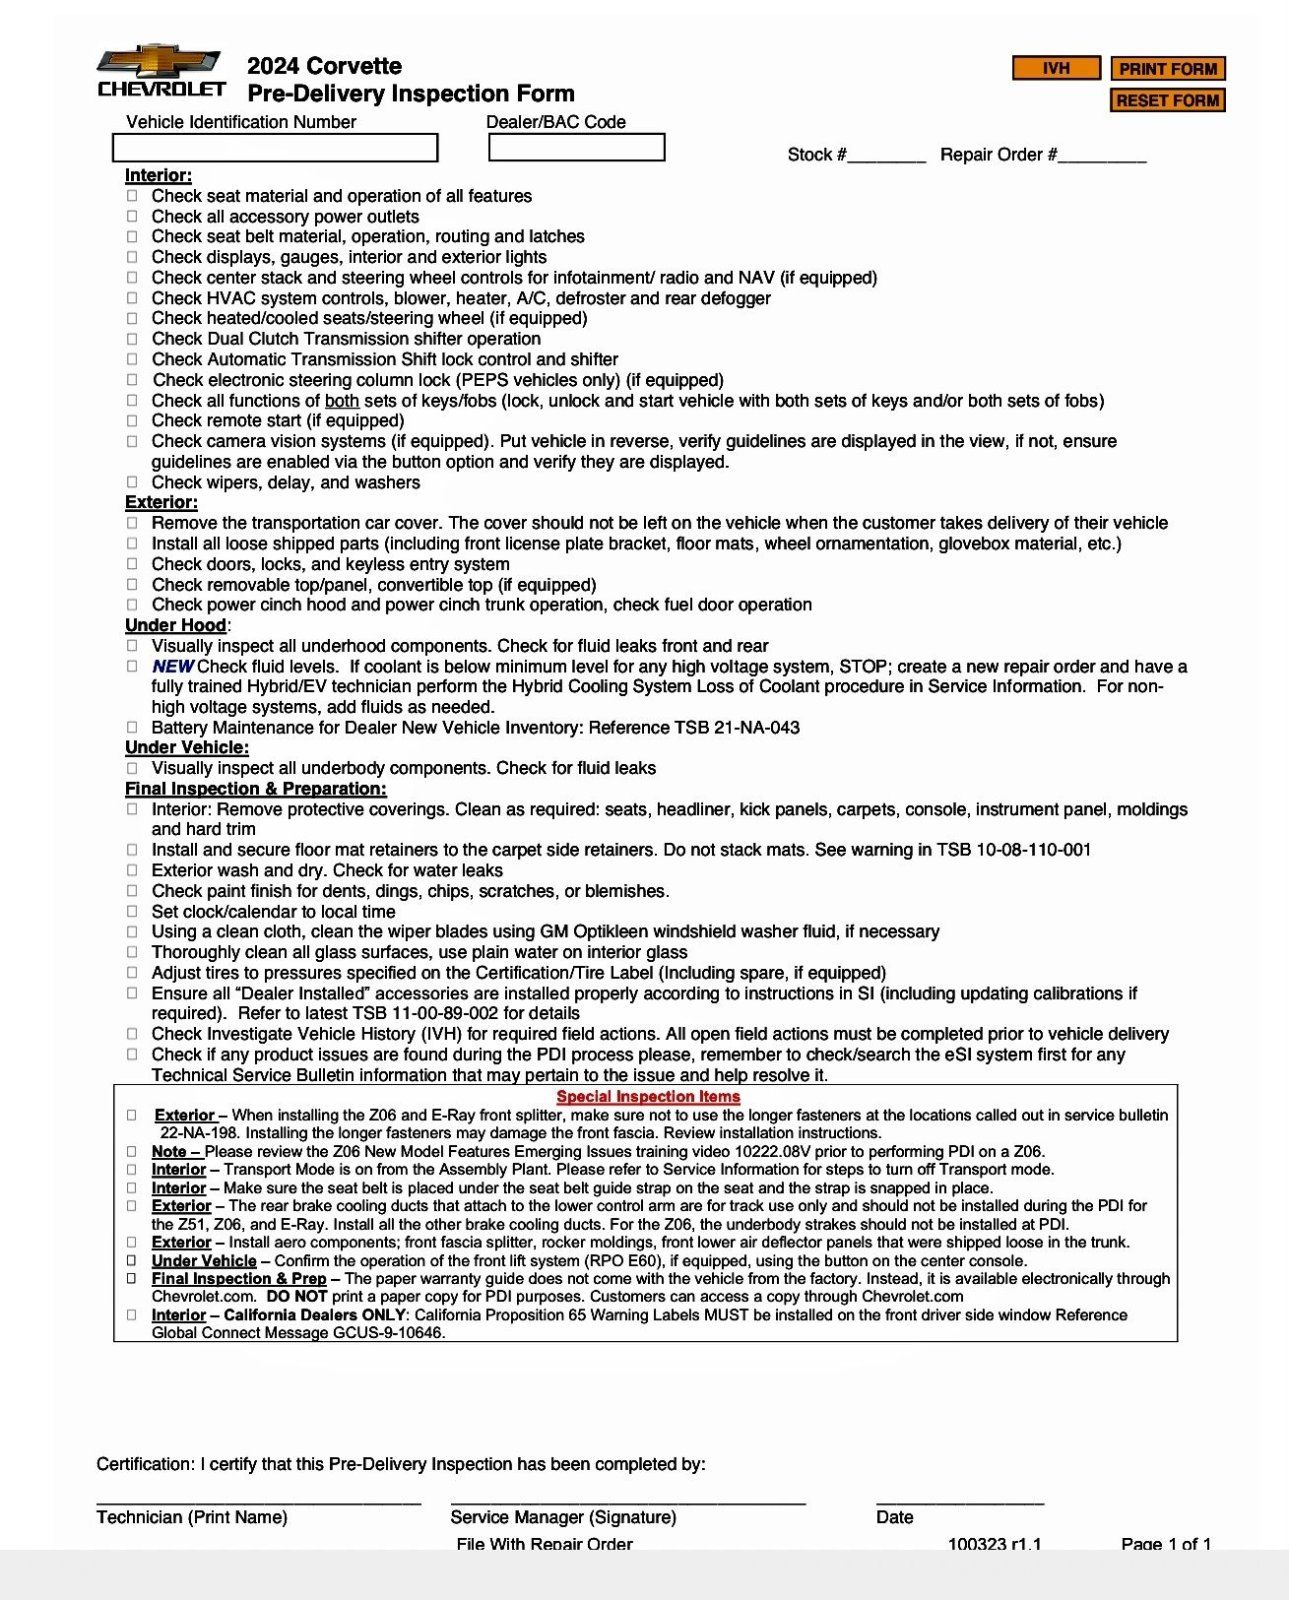 2024 Corvette PDI Checklist.jpeg